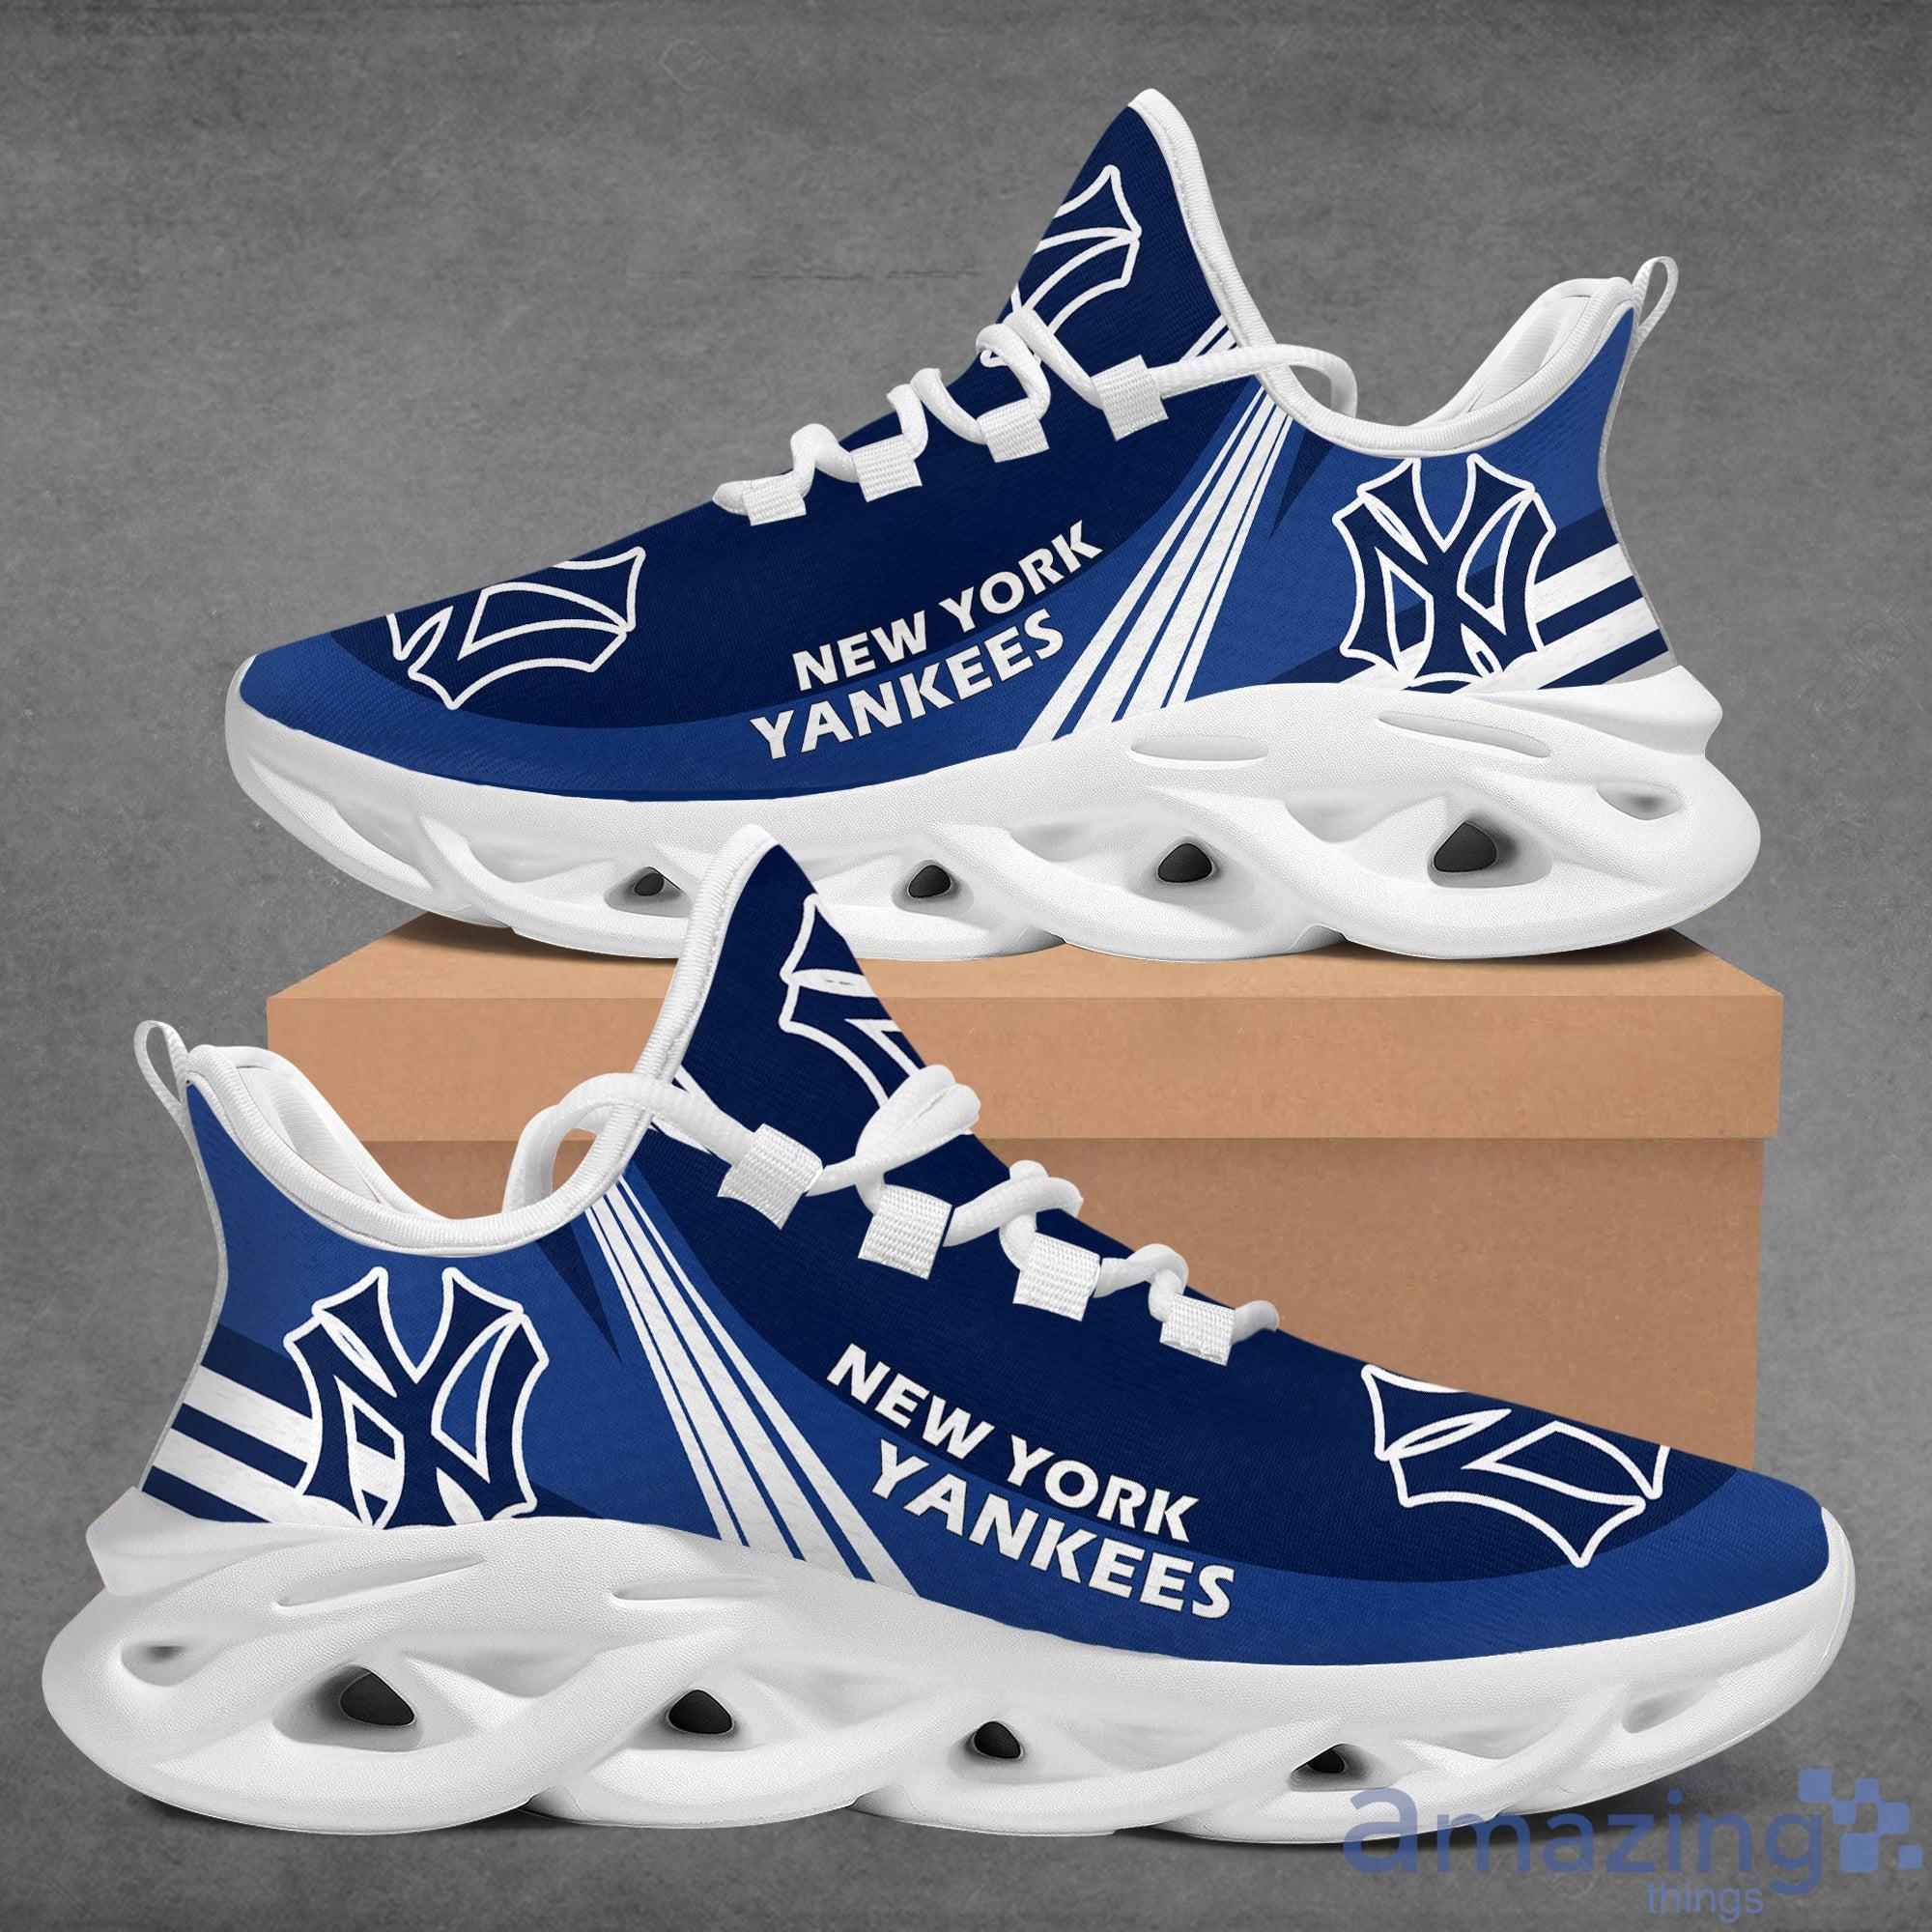 New York Yankees 3D Max Soul Sneakers Running Shoes